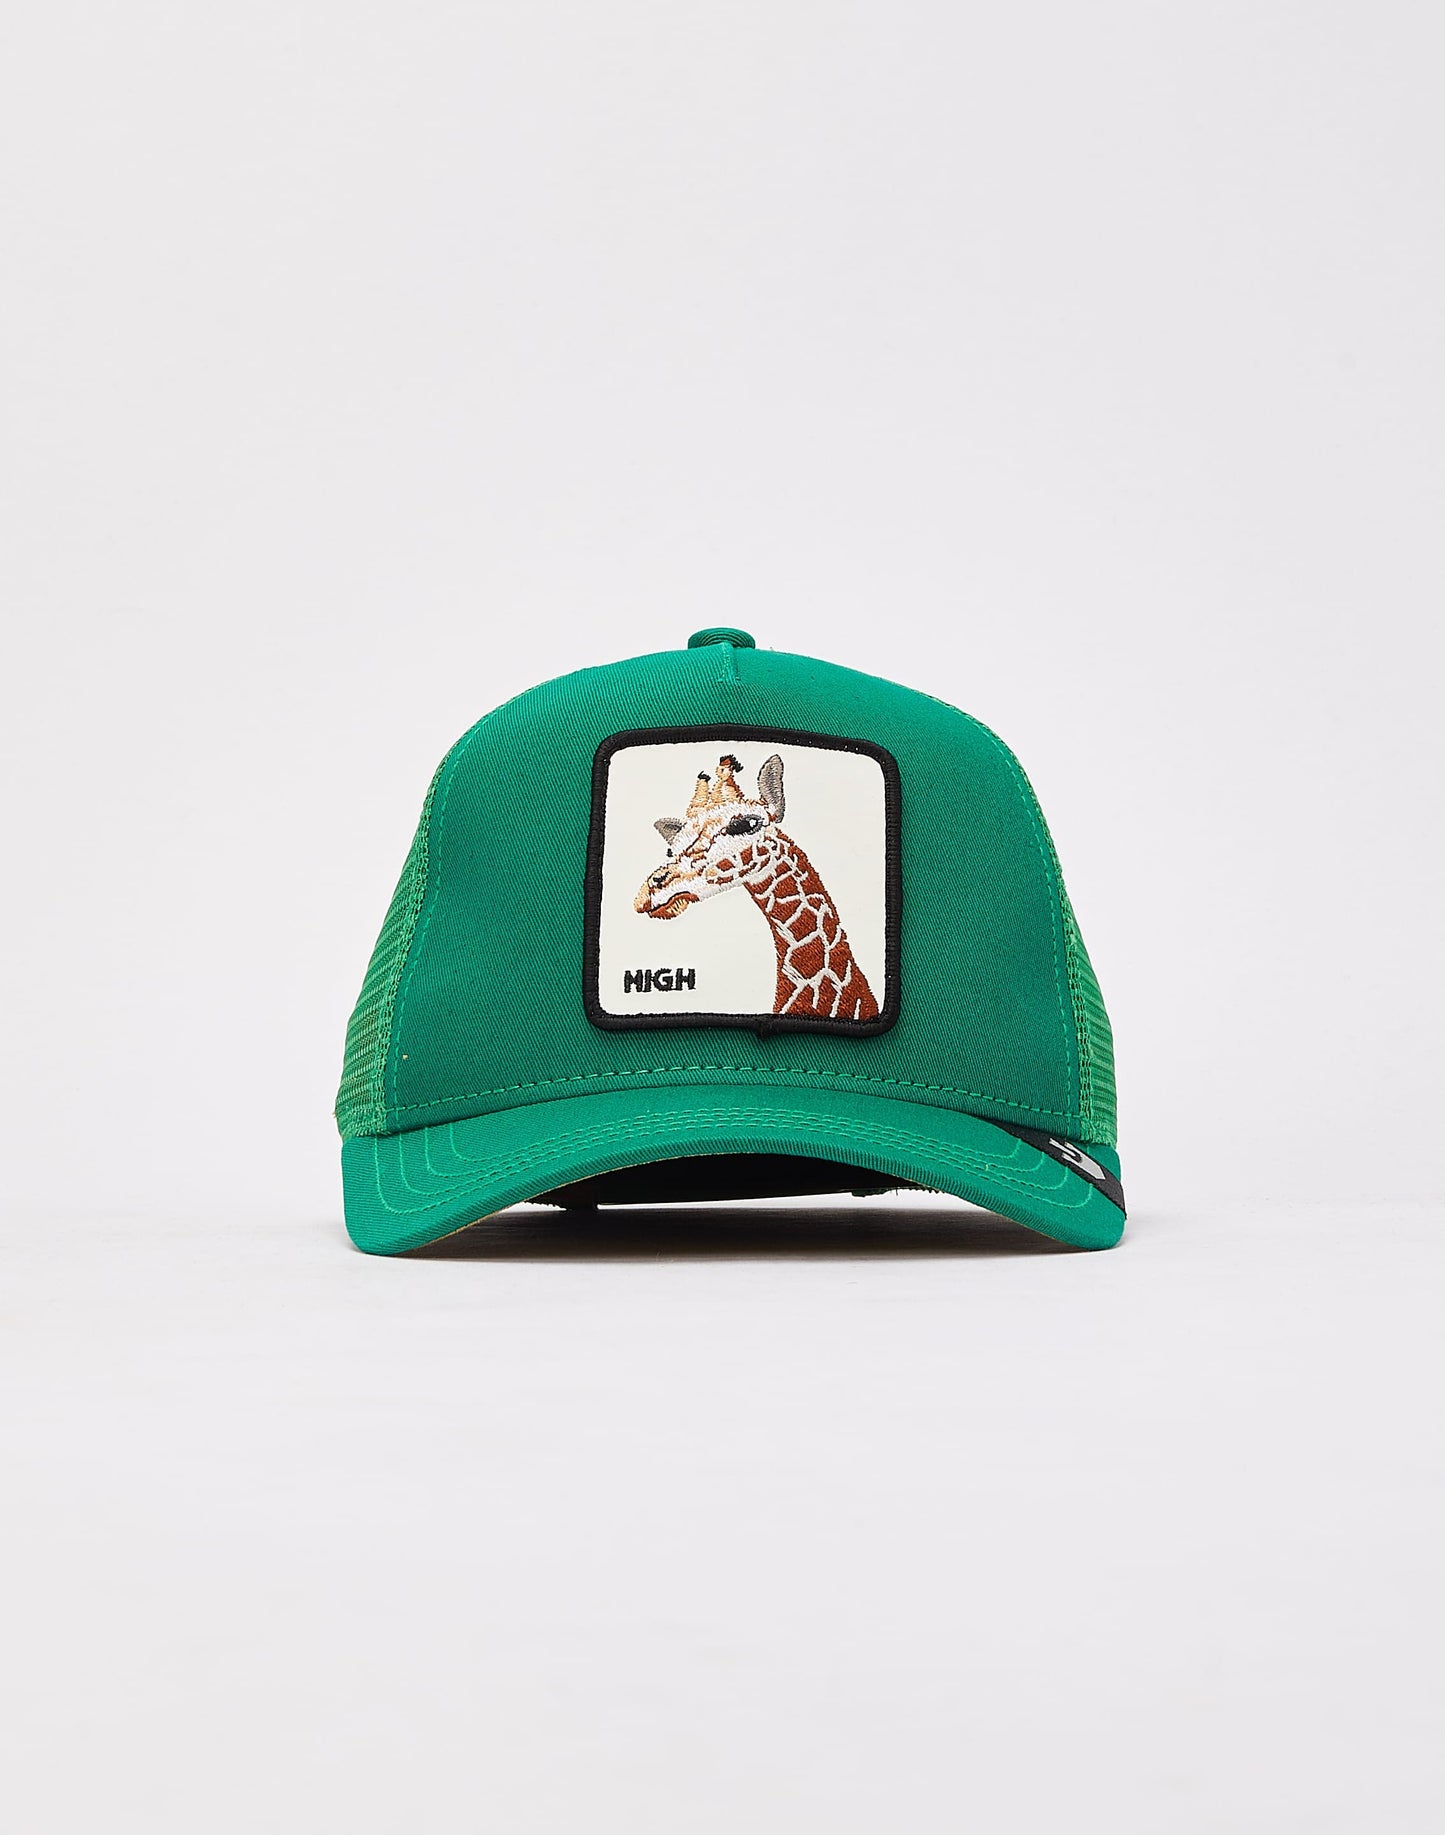 So High Green Trucker Hat - Goorin Bros